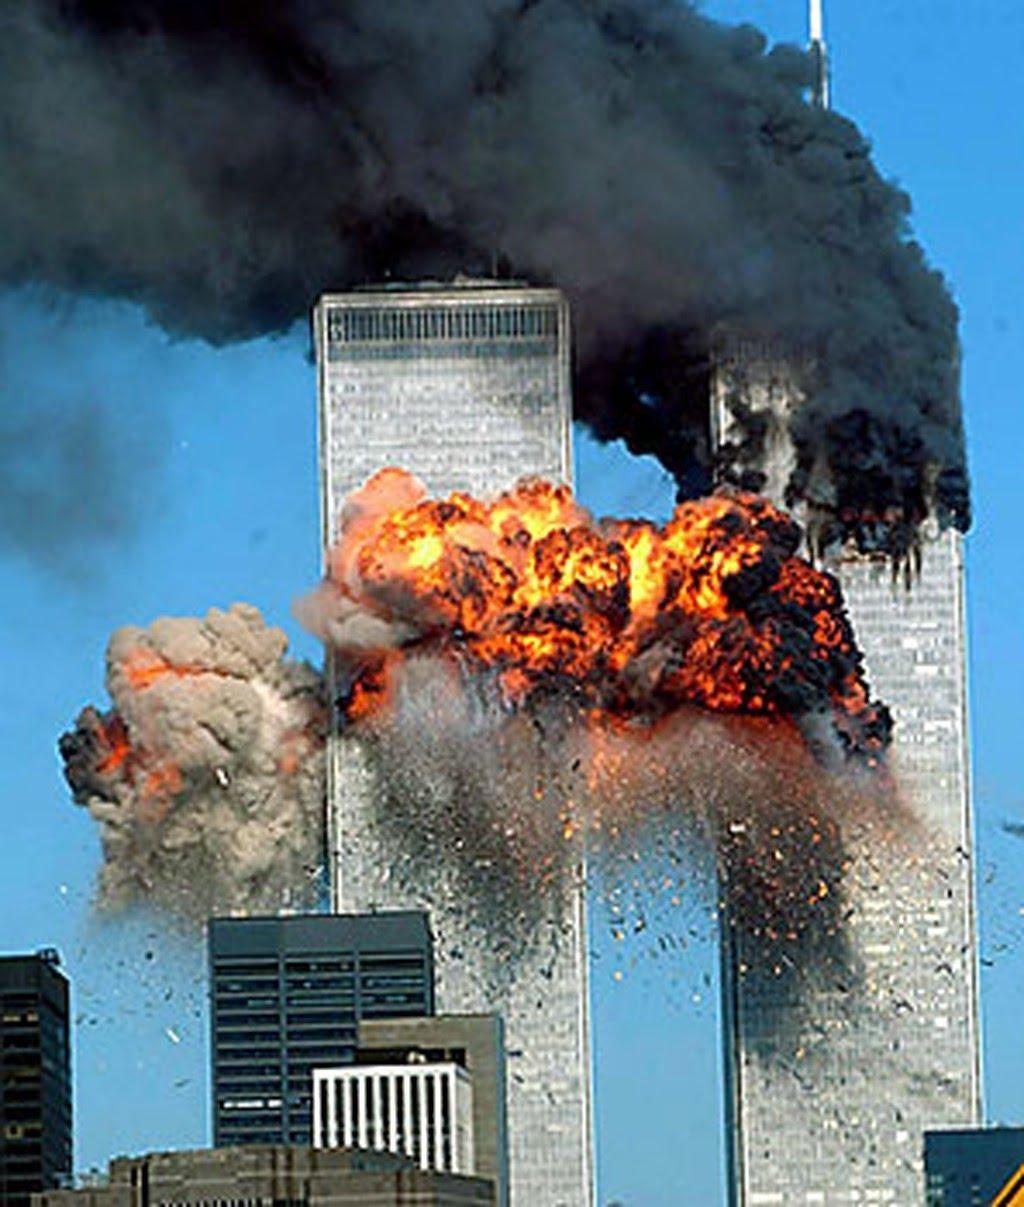 Attack on the World Trade Center 8:46 am - Hijacked Flight 11 crashes into 1 World Trade Center 9:03 am - Hijacked Flight 175